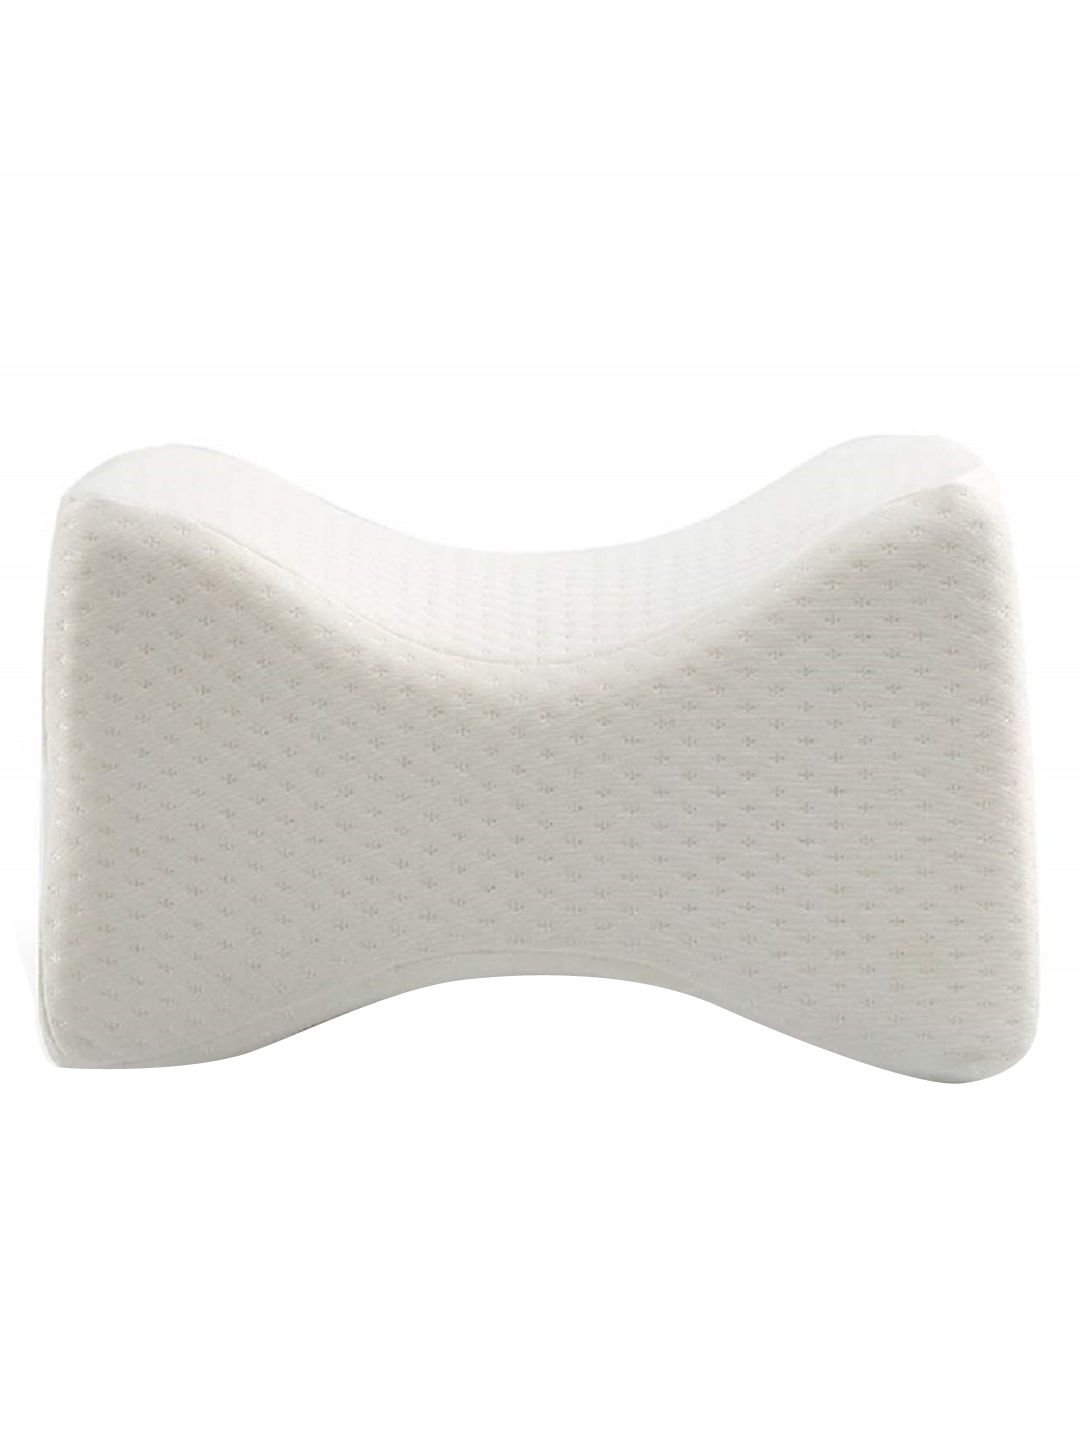 Pum Pum White Textured Memory Foam Orthopedic Knee Support Leg Rest Pillow Price in India